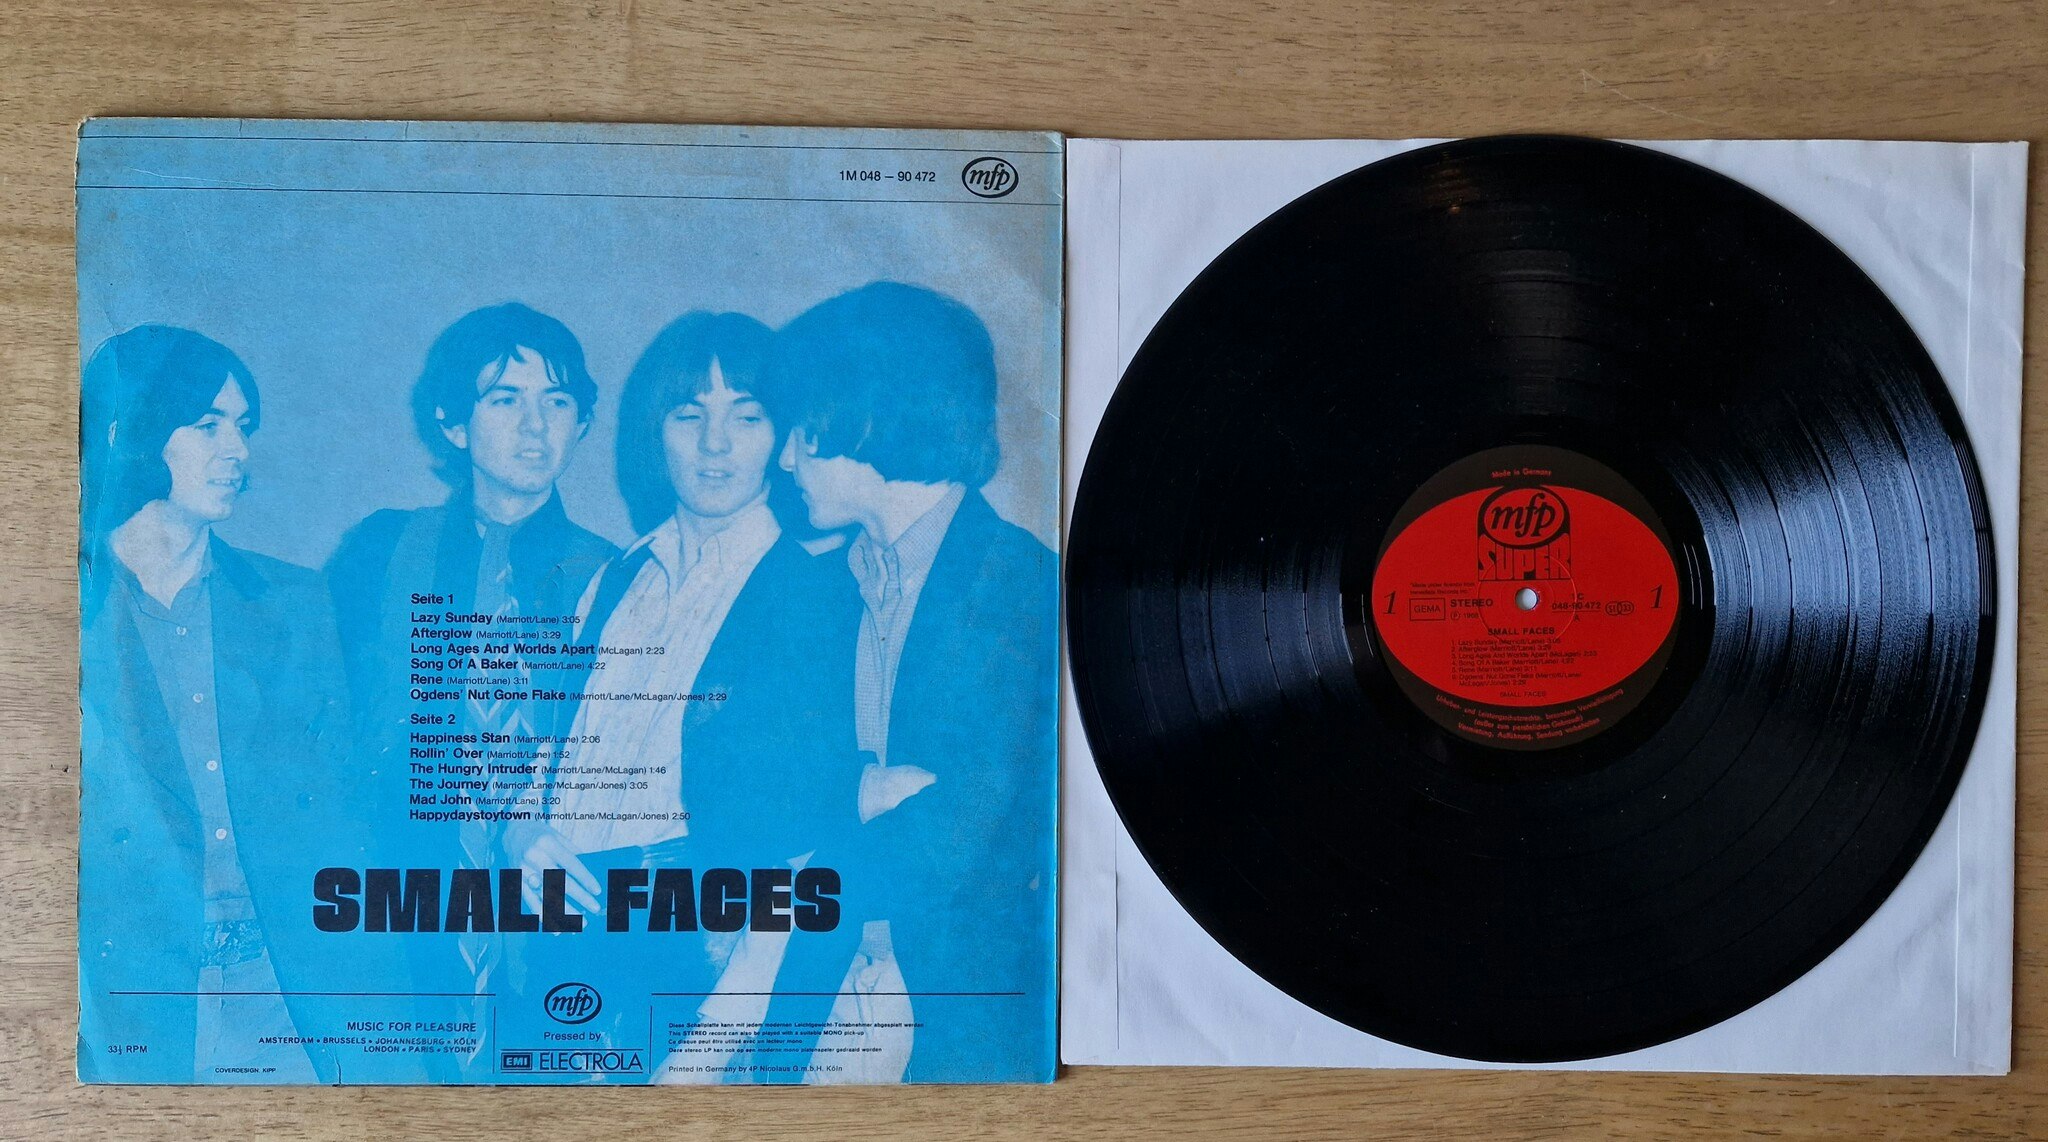 Small faces, Small Faces. Vinyl LP